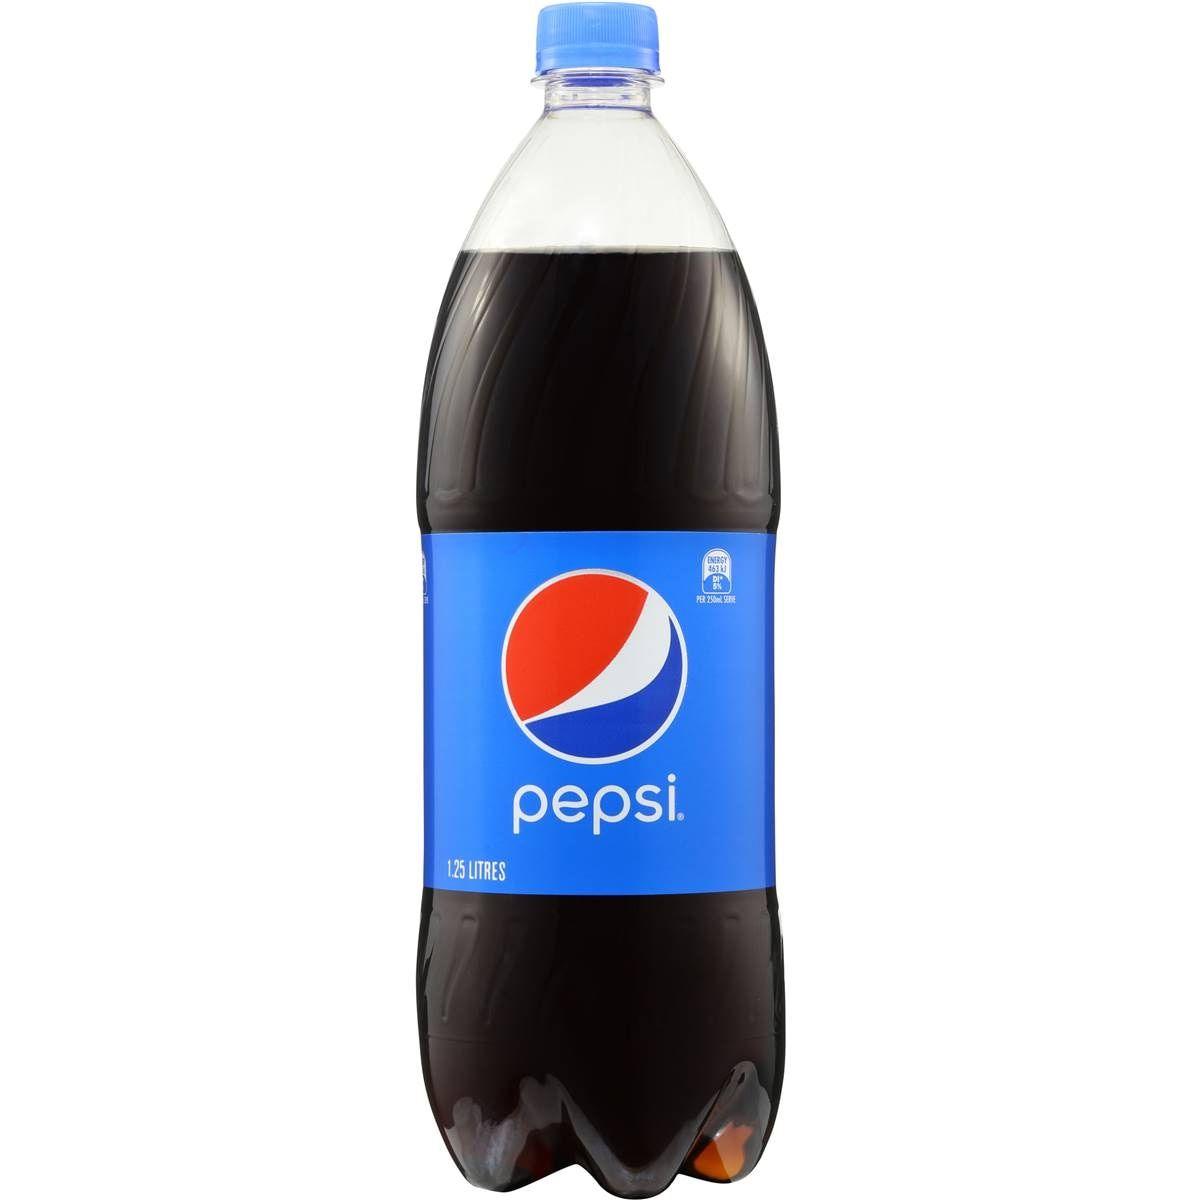 Pepsi Bottle Logo - Pepsi Bottle 1.25l | Woolworths